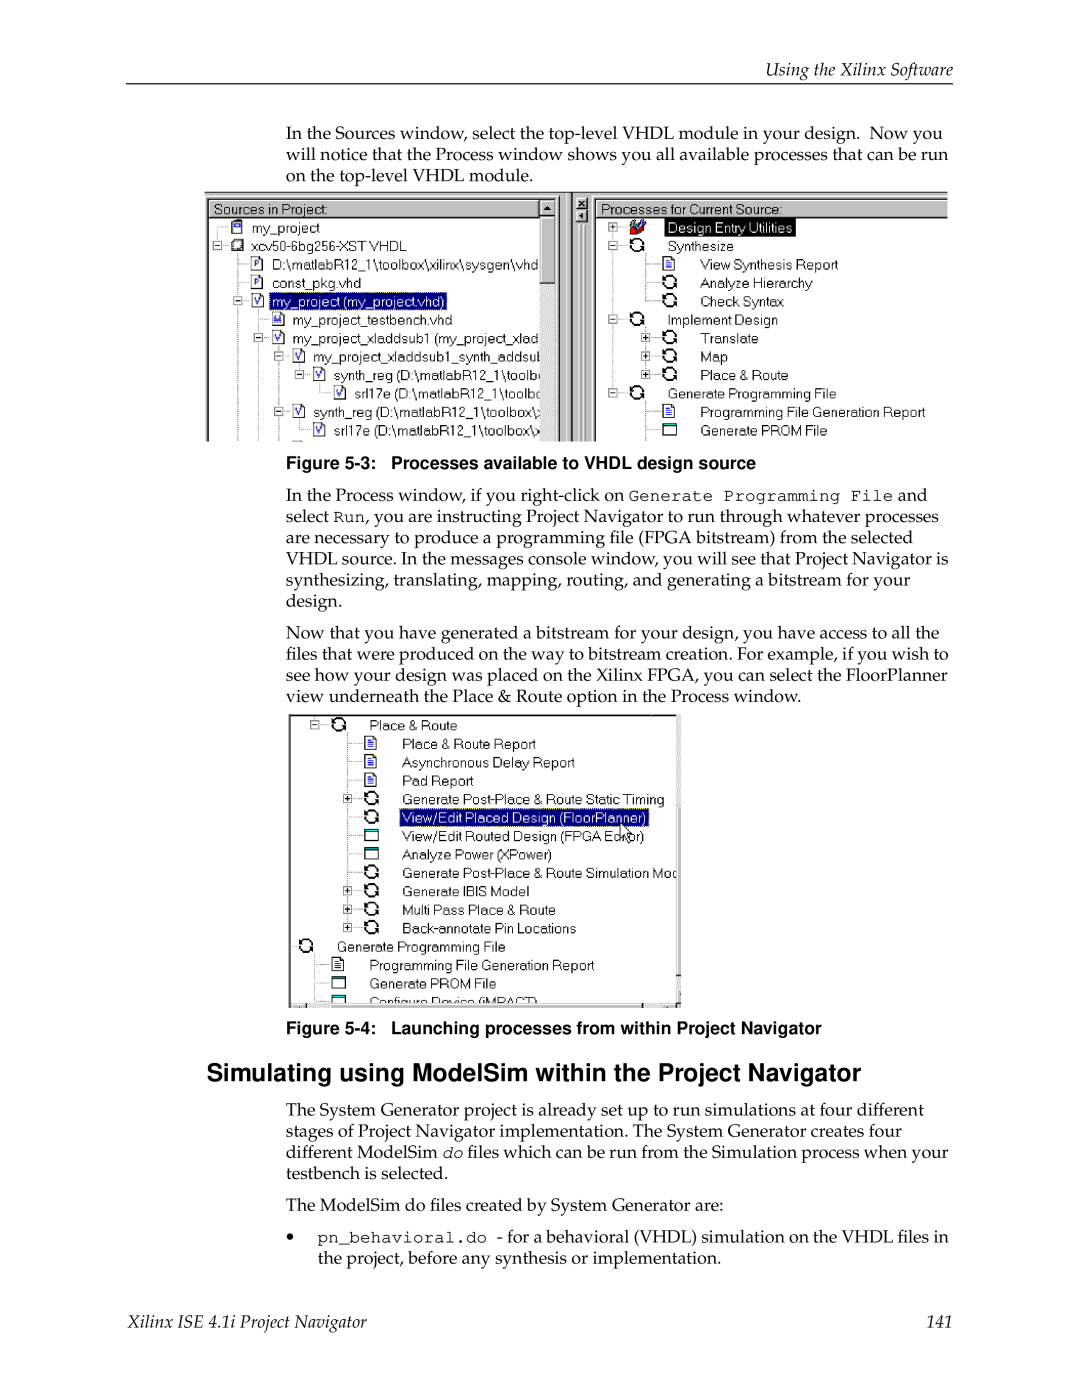 Xilinx V2.1 manual Using the Xilinx Software, Xilinx ISE 4.1i Project Navigator 